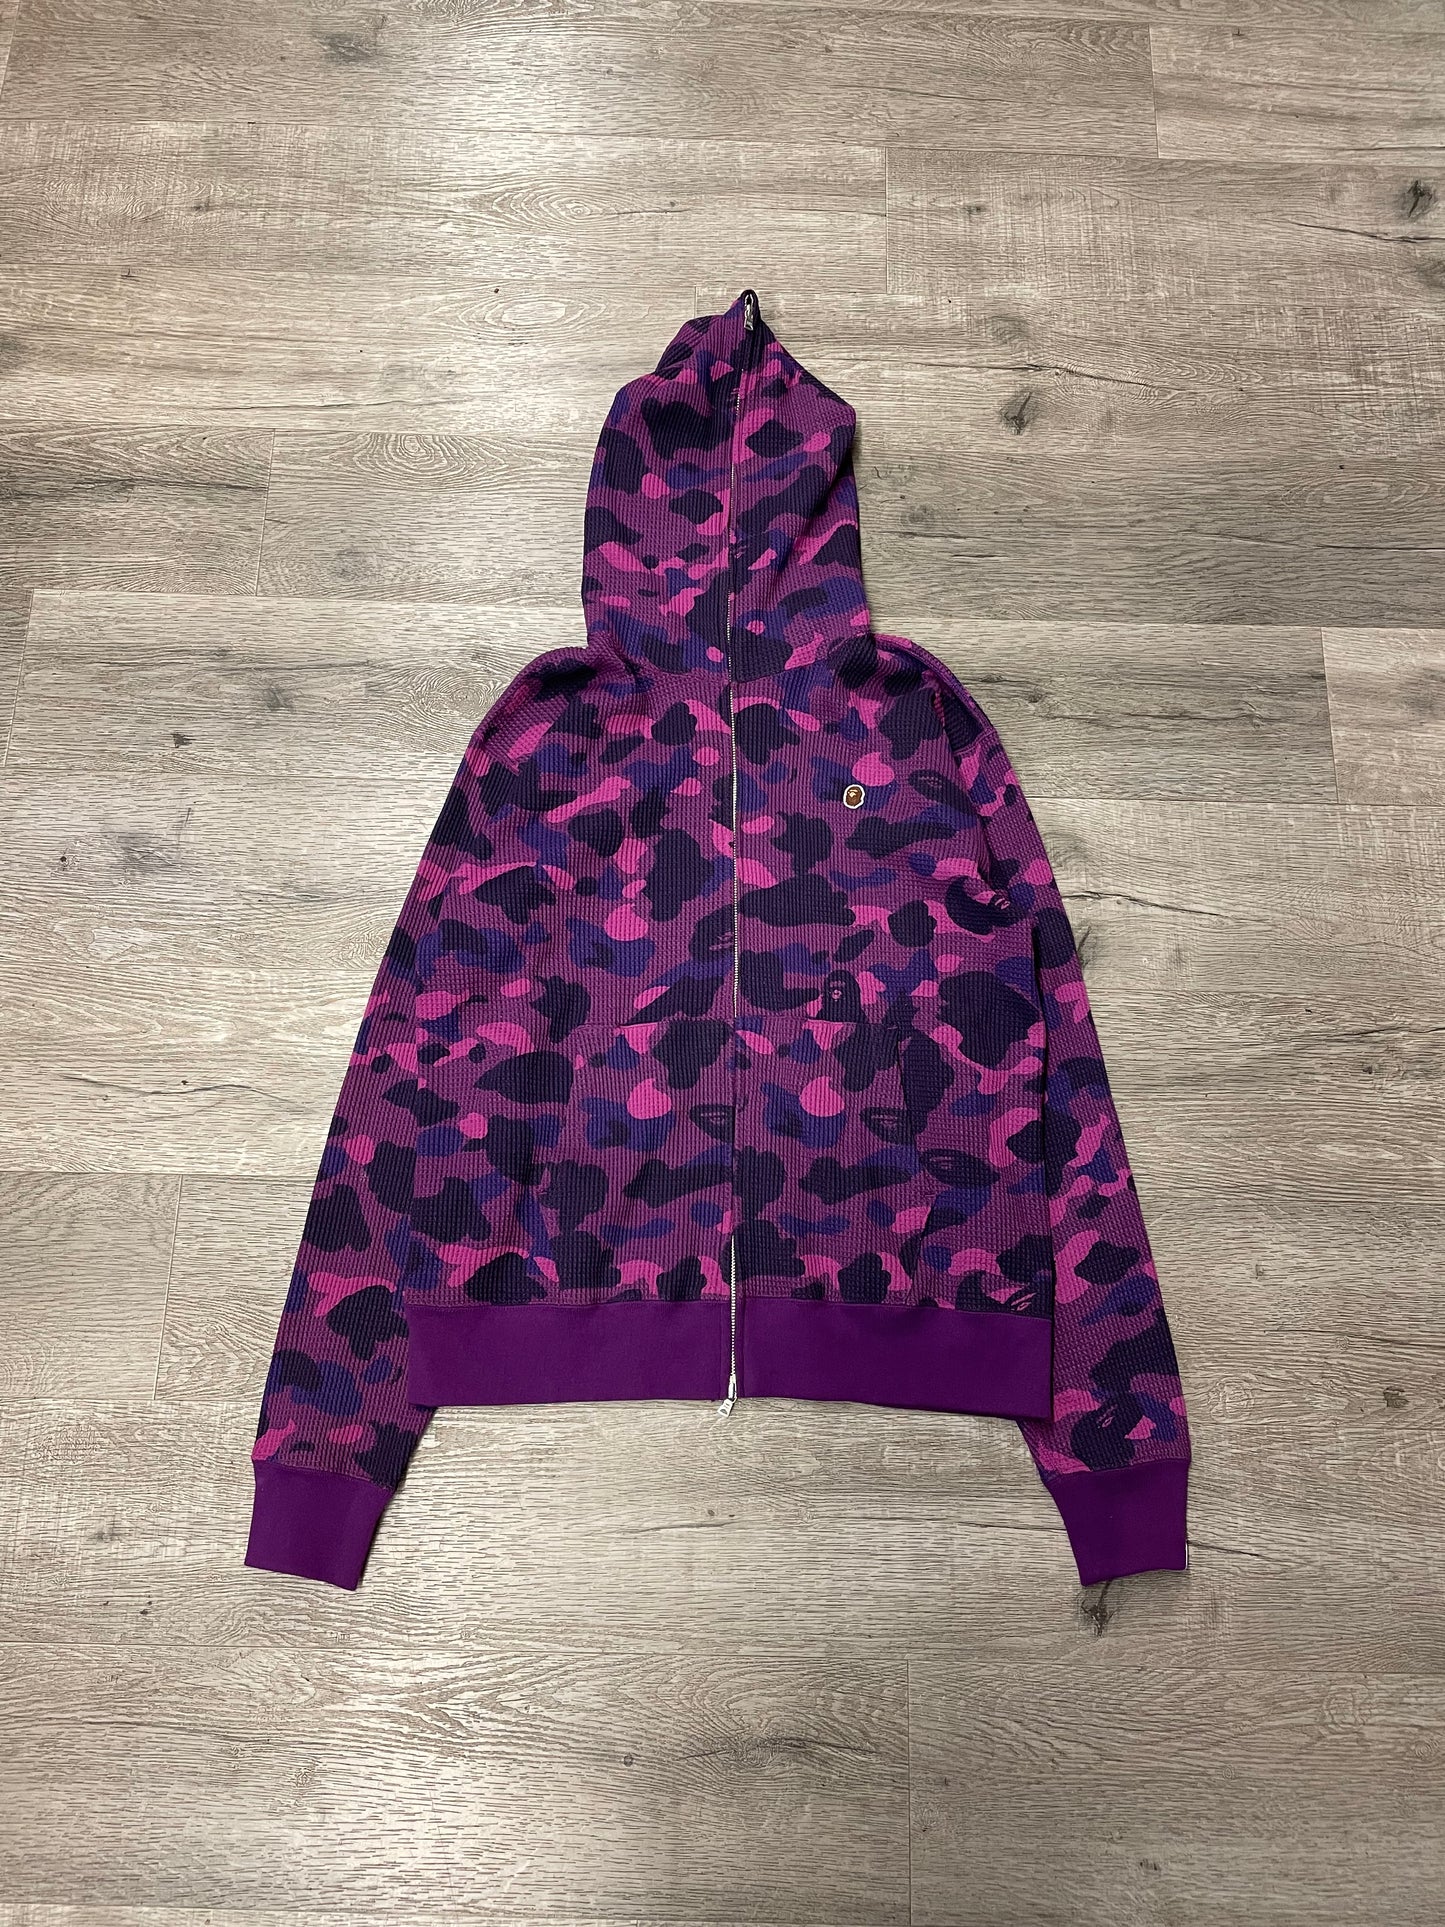 Bape Thermal Hood Purple Camo Zip